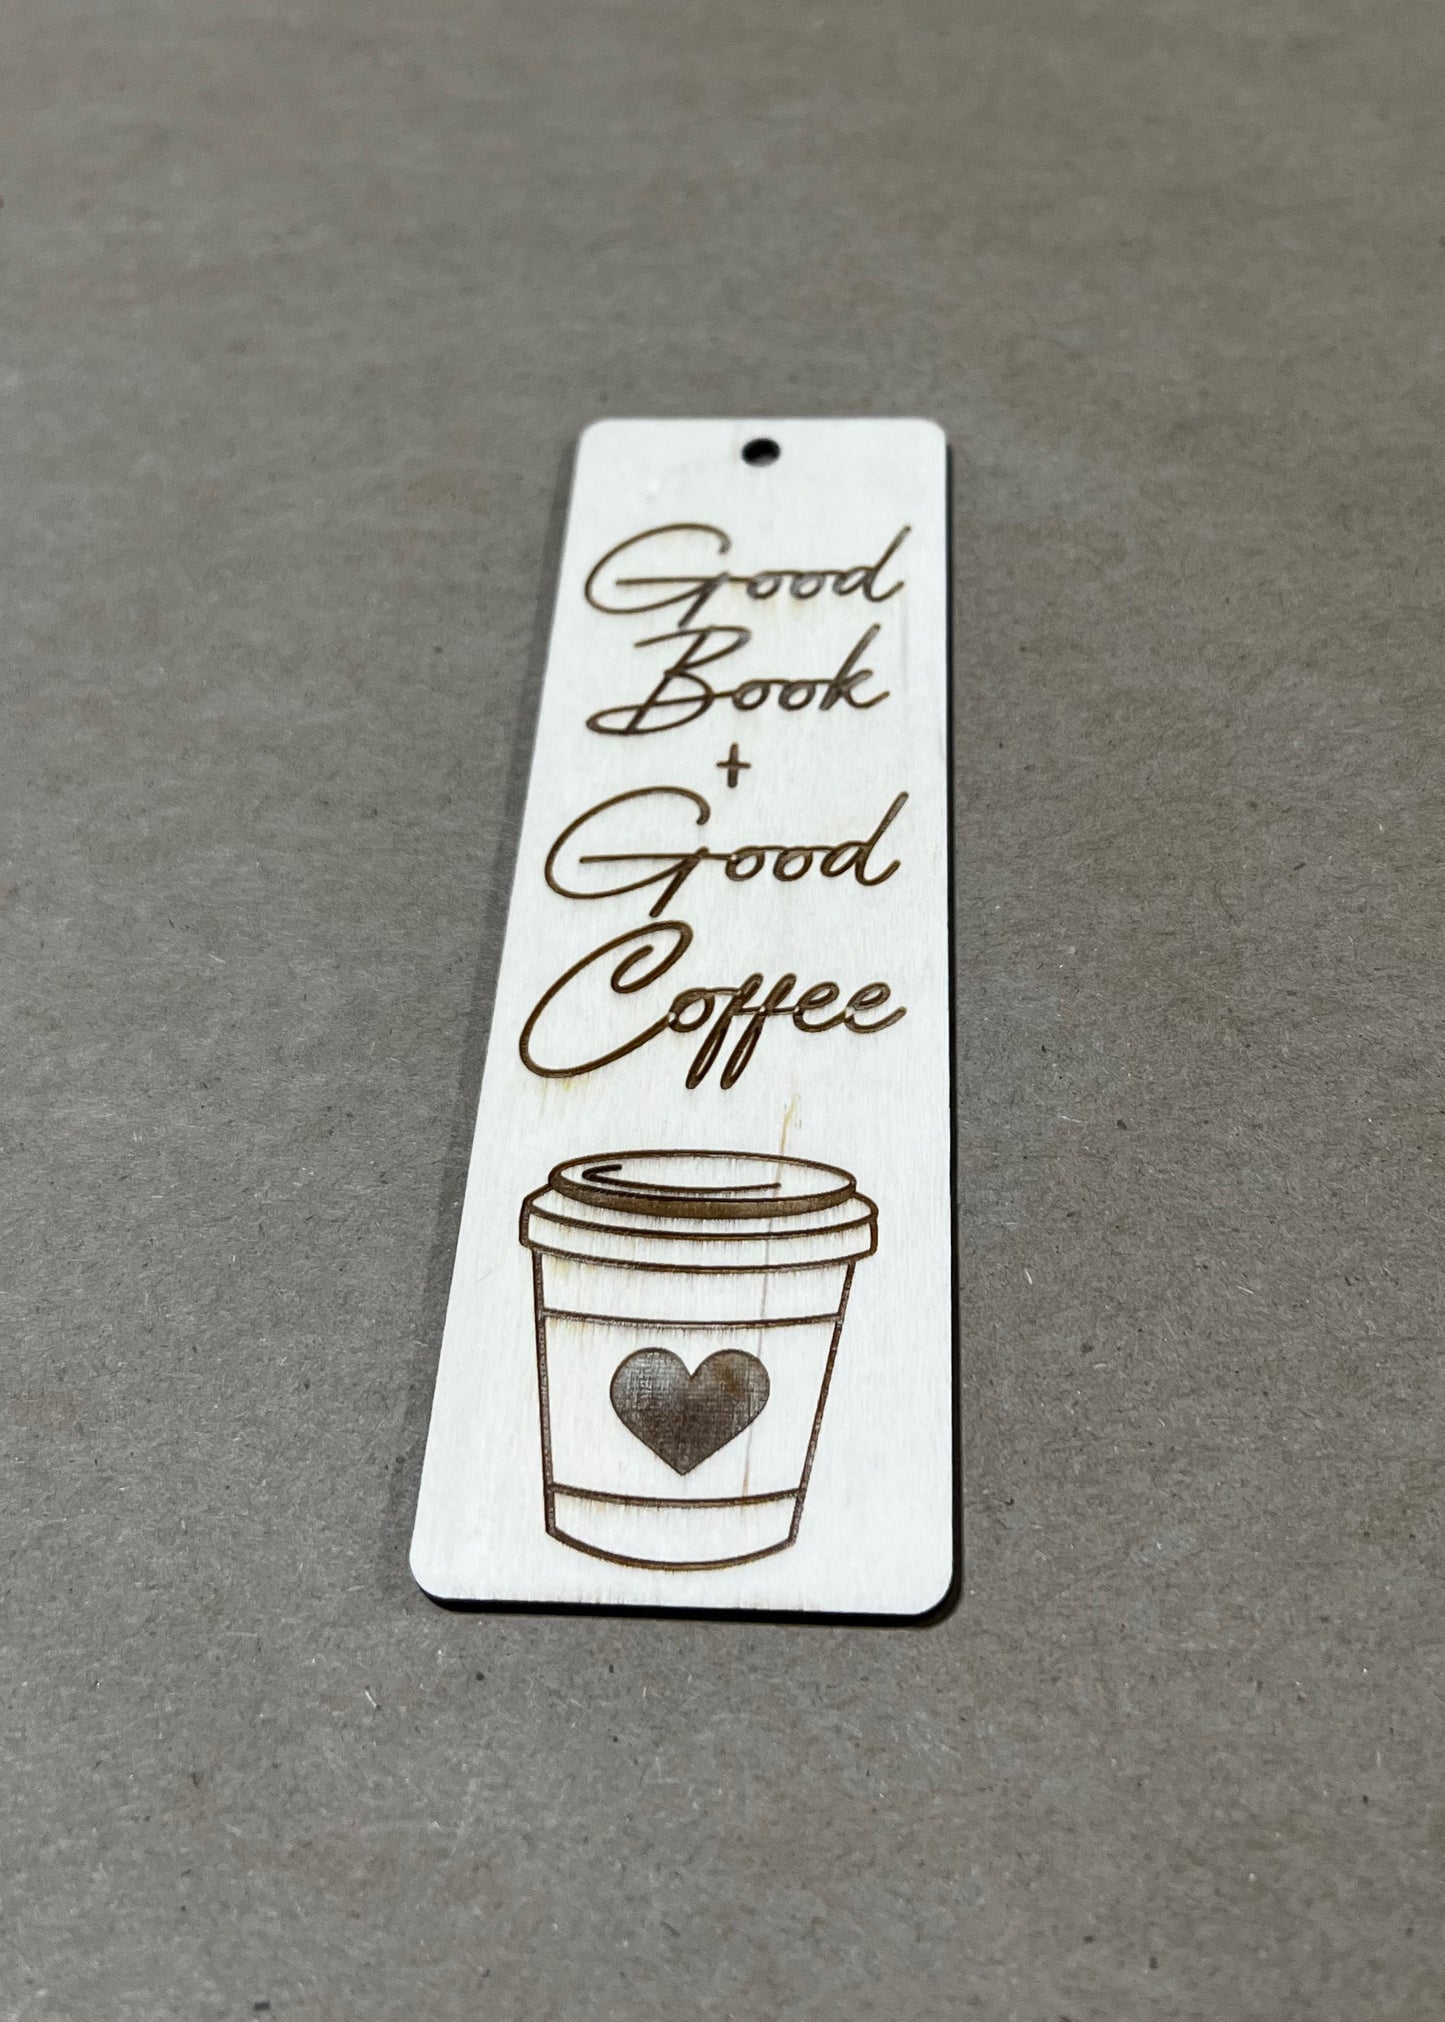 Good Book & Good Coffee Bookmark, Book Mark, Book Lover gift